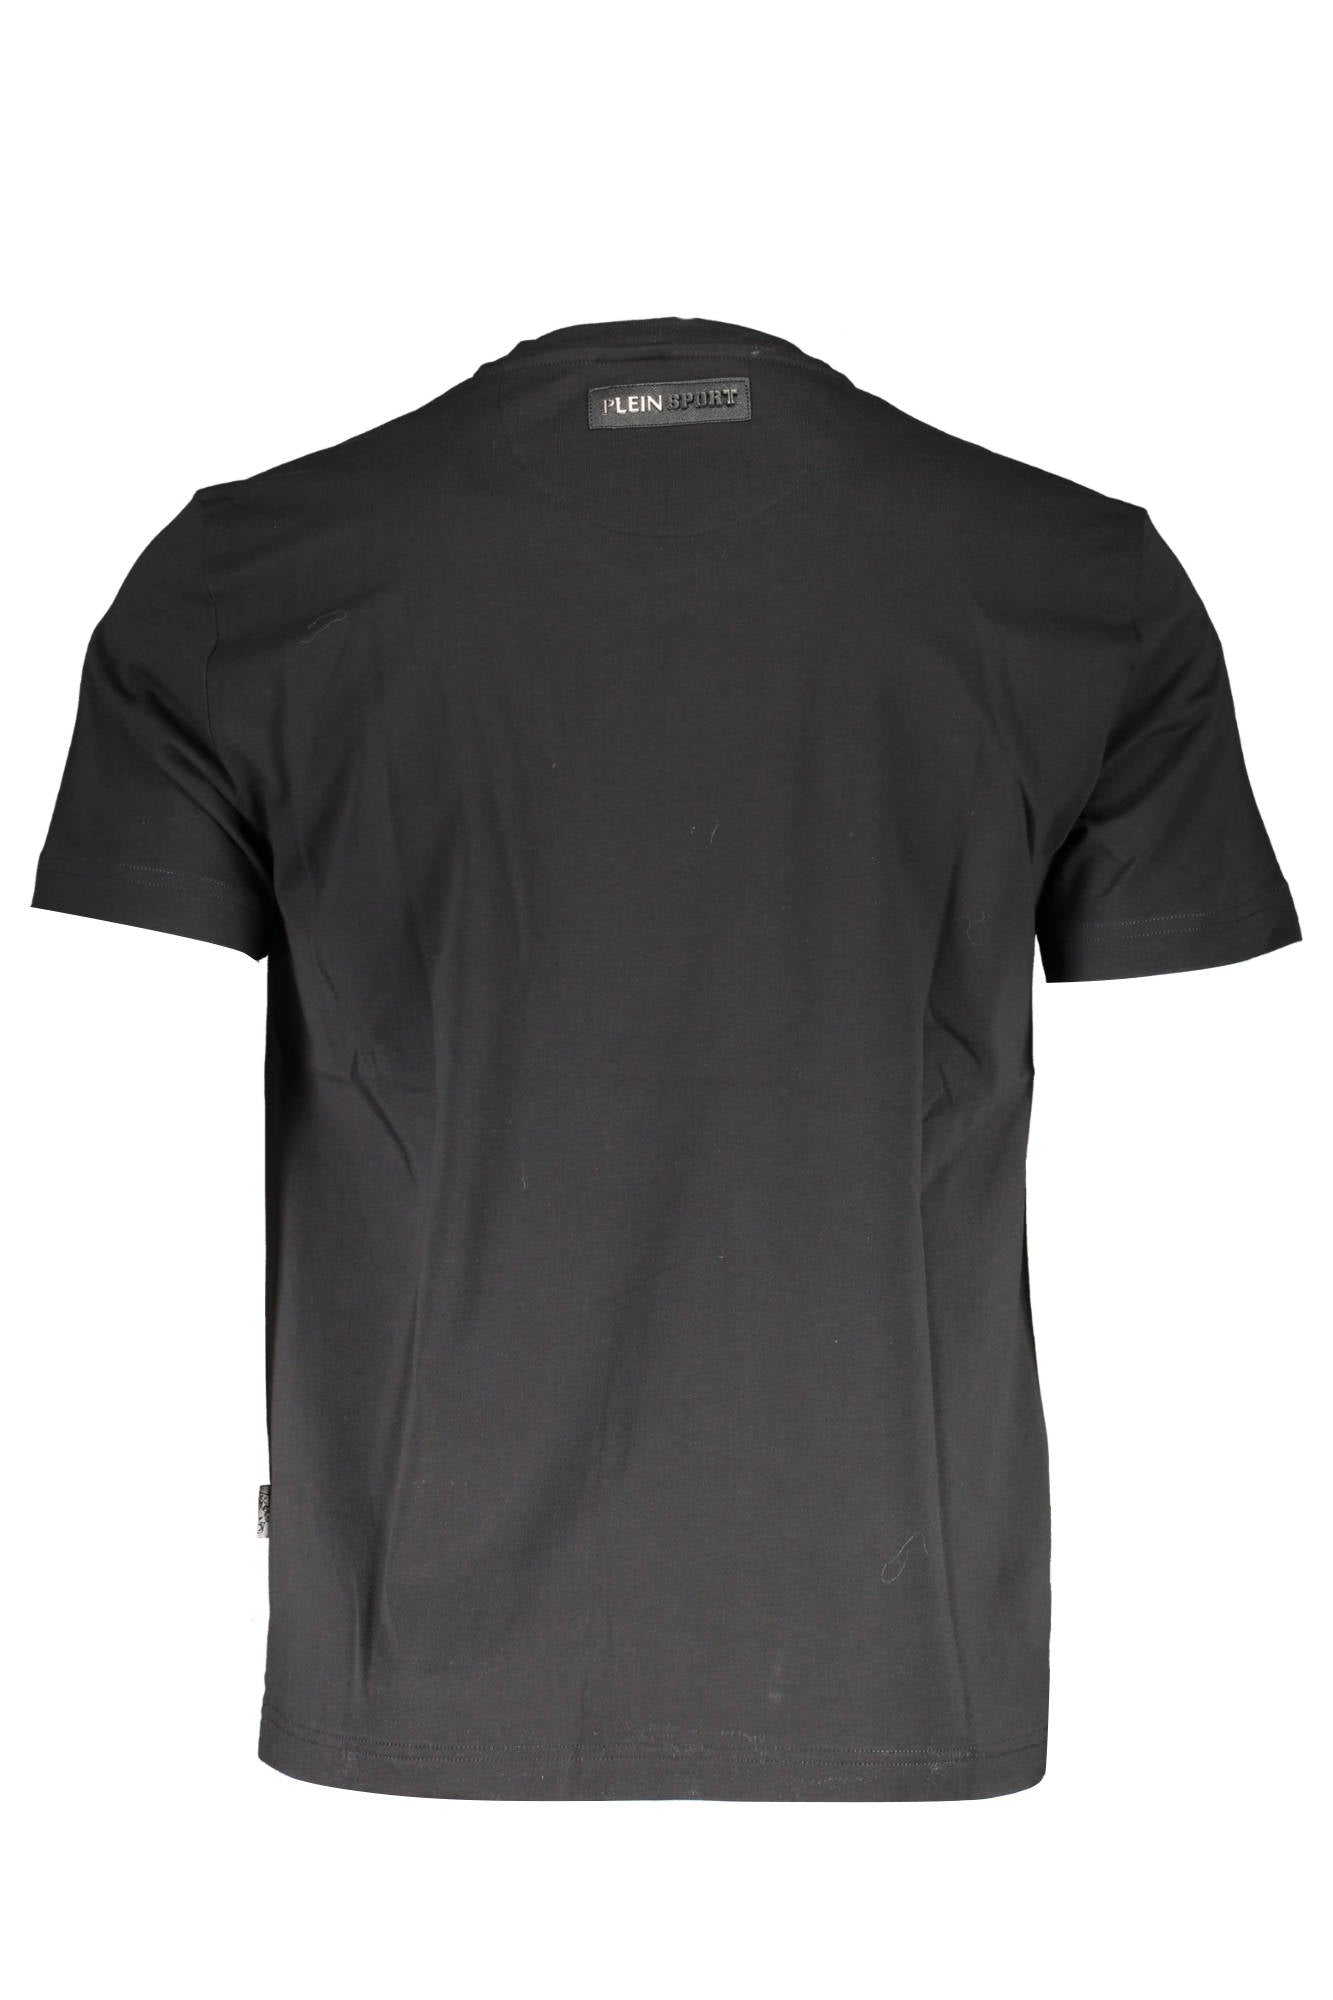 Plein Sport Black Cotton T-Shirt - Fizigo